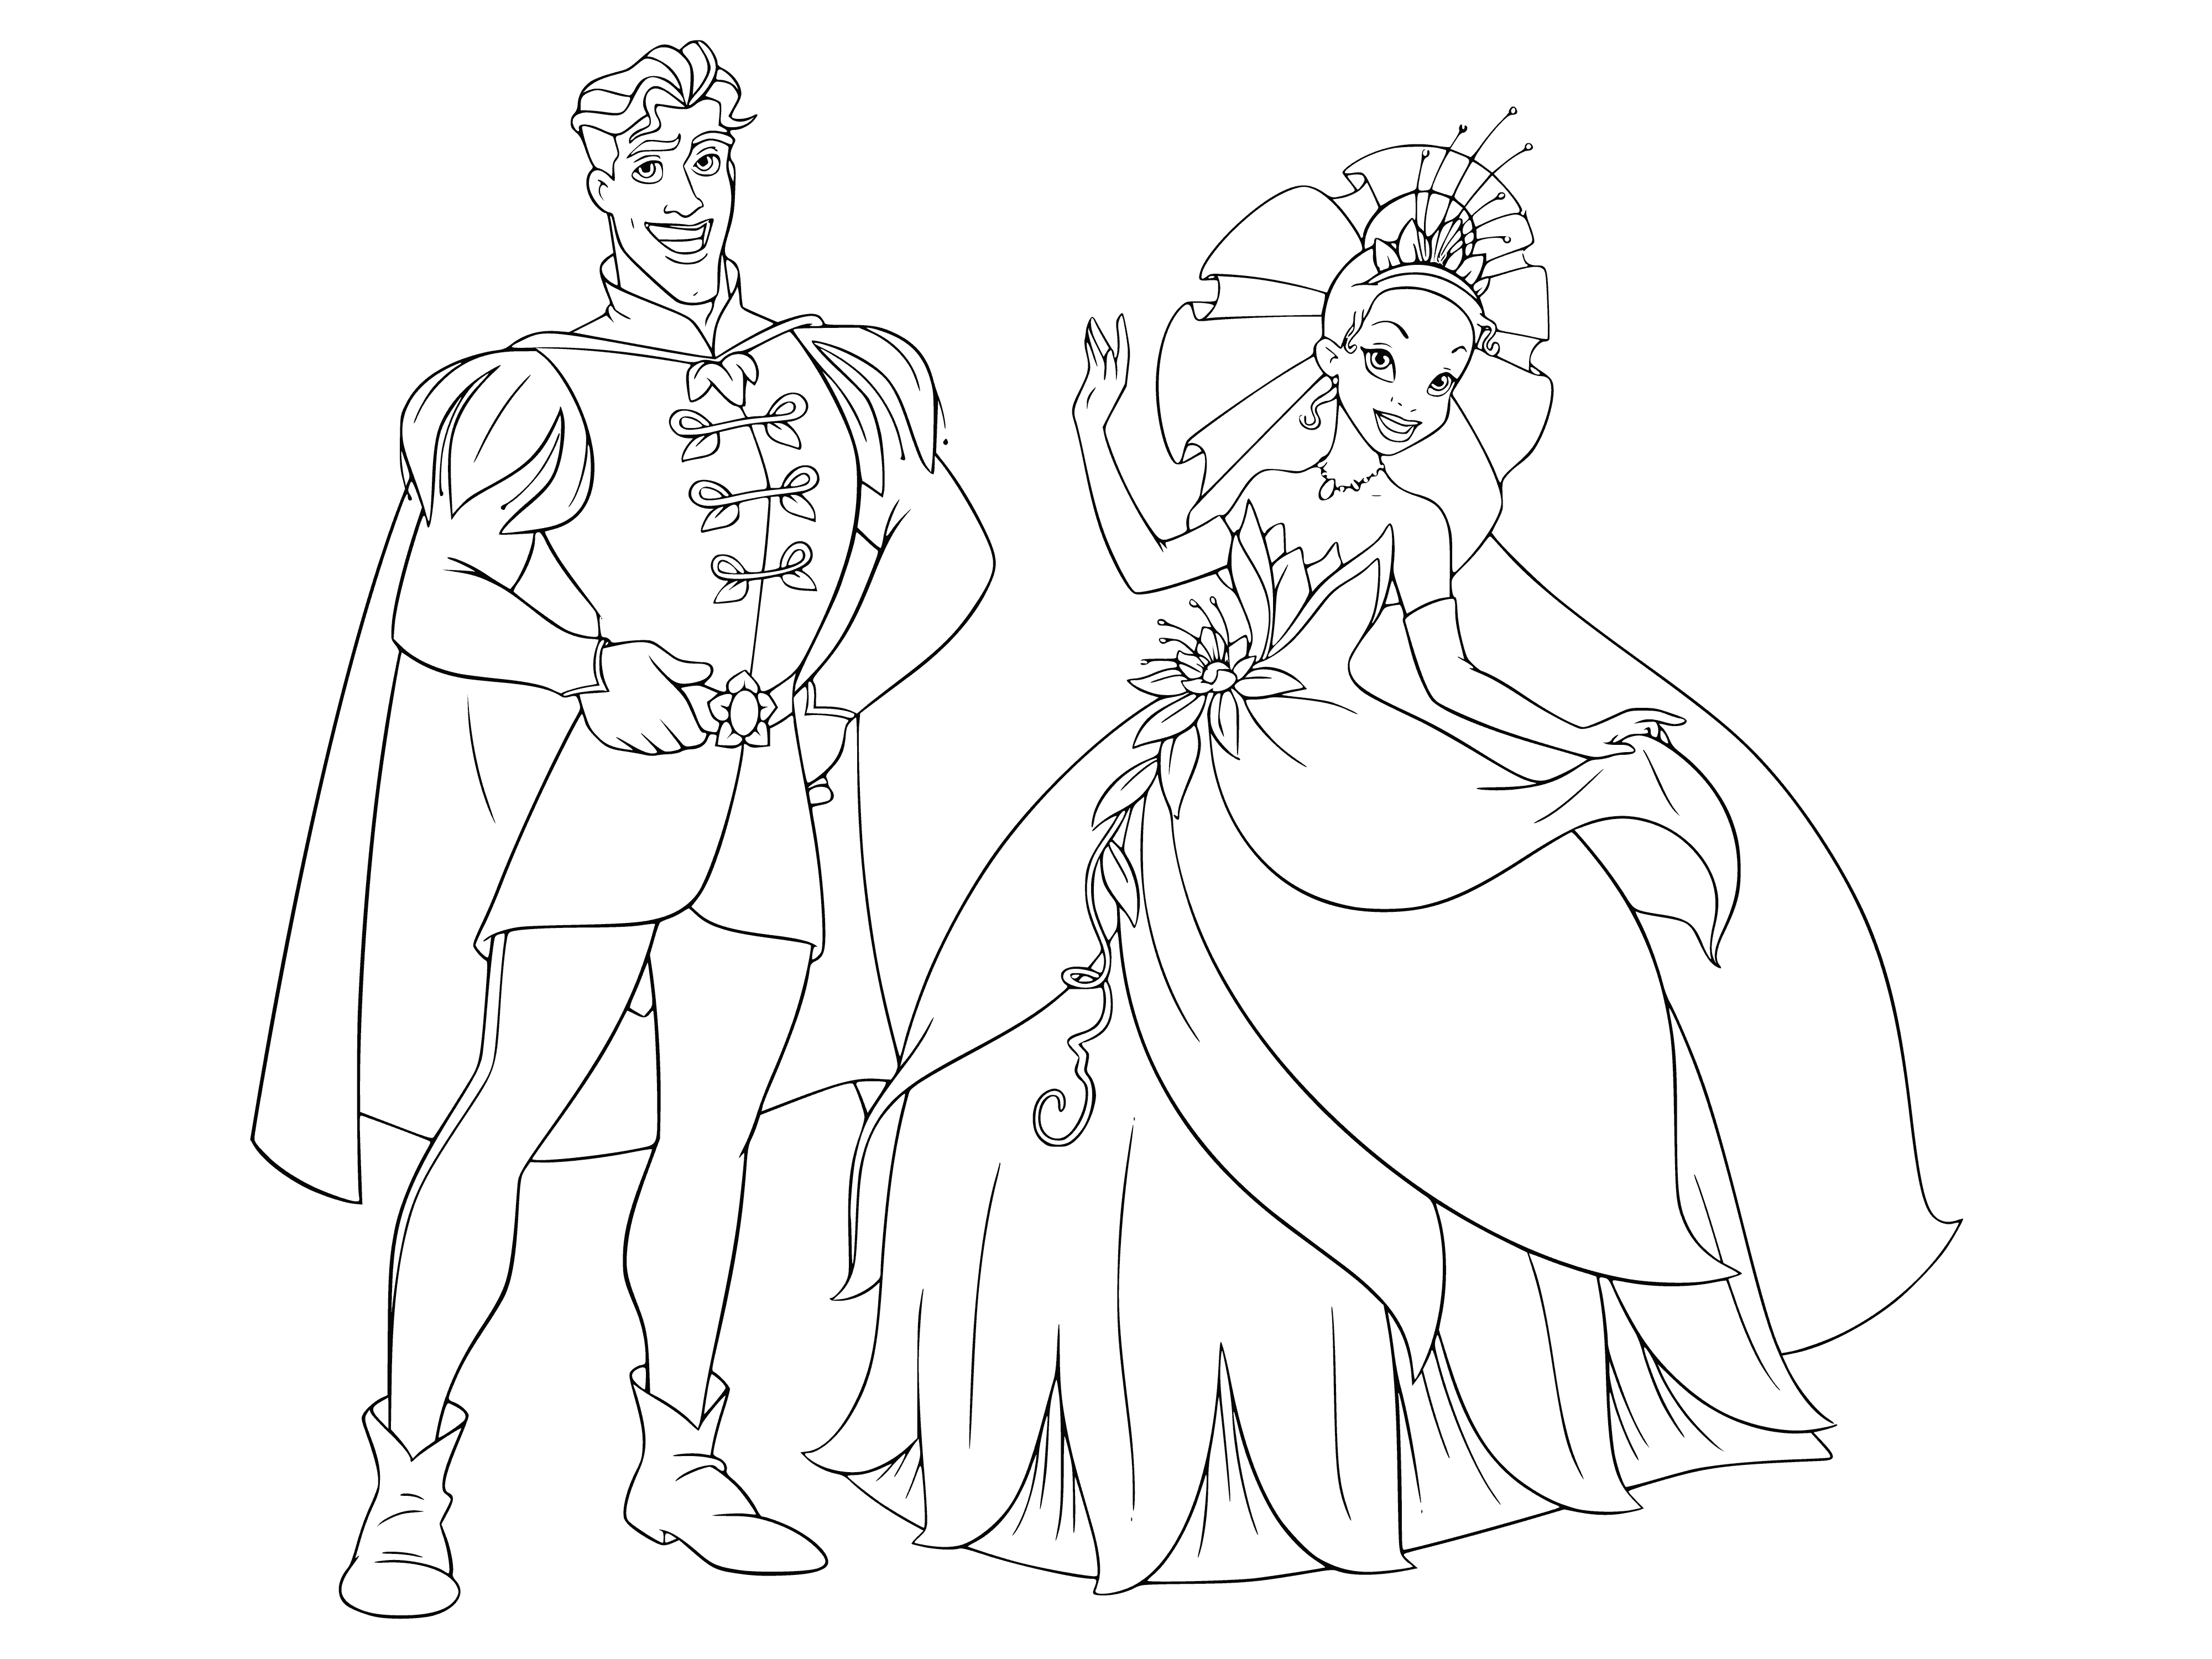 Prince Naveen and Princess Tiana coloring page